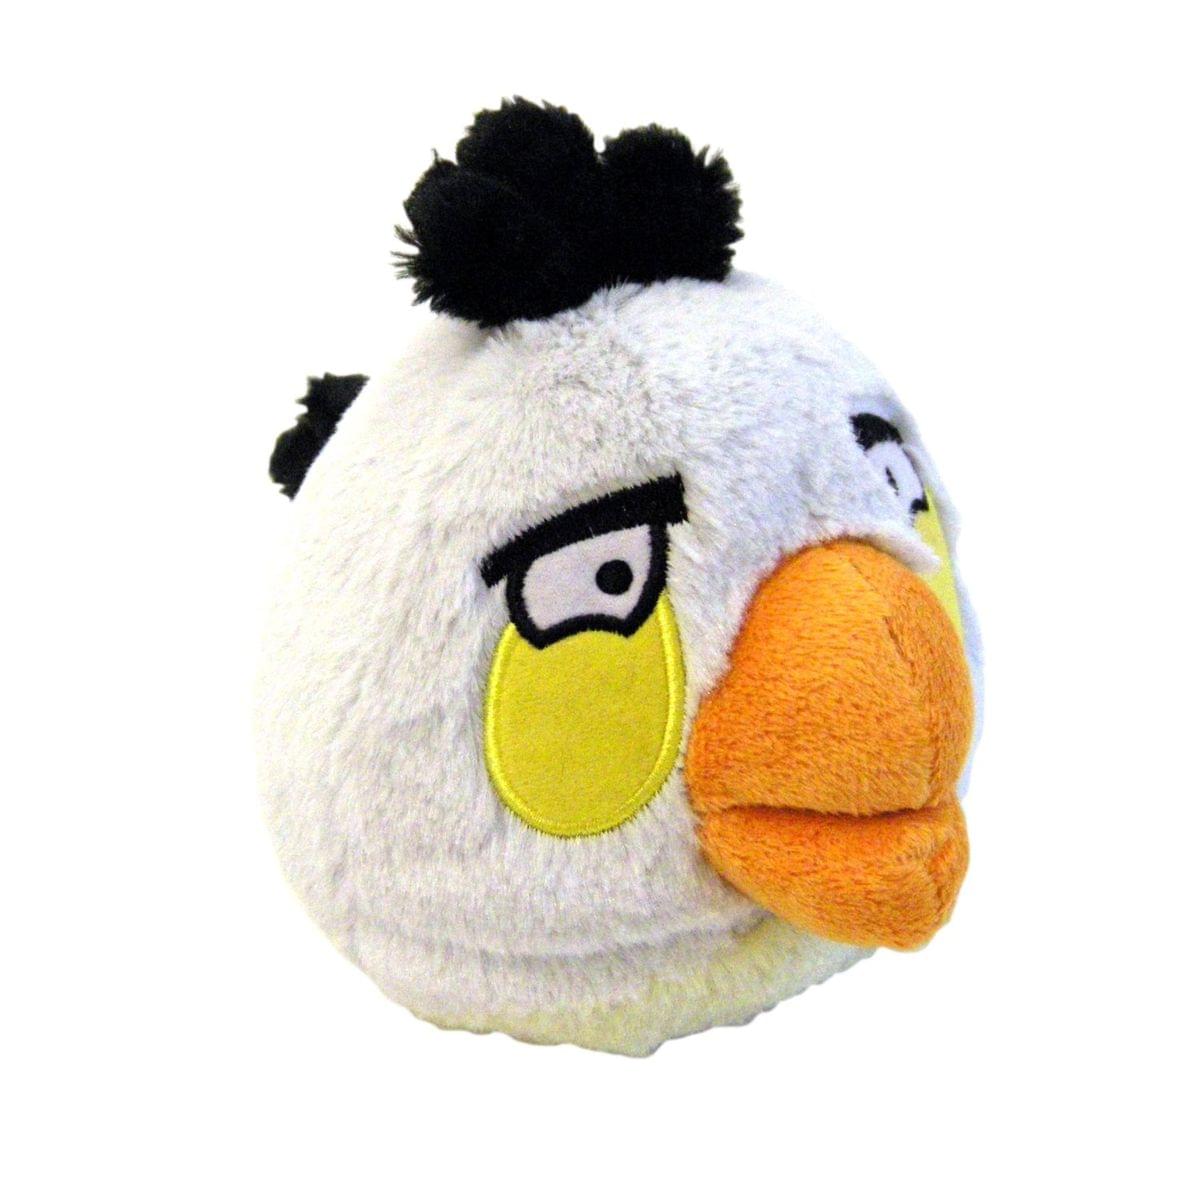 Angry Birds 8" Plush With Sound: White Bird